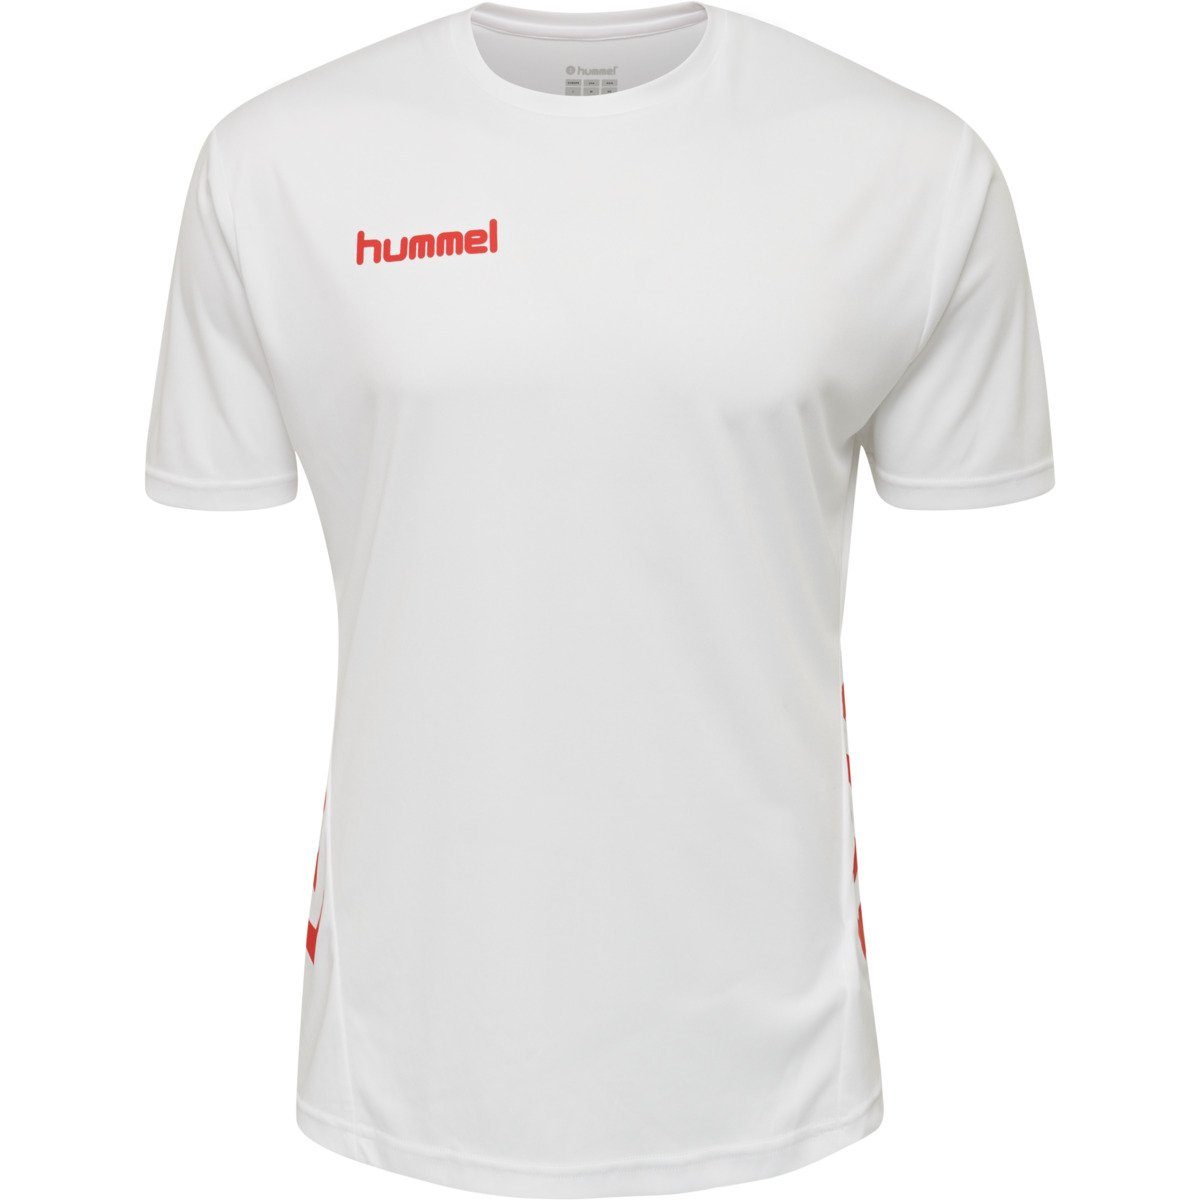 hummel T-Shirt Promo Duo Trikotset 1x WHITE/TRUE (Duo 1x Short Trikot) Jr. RED Set